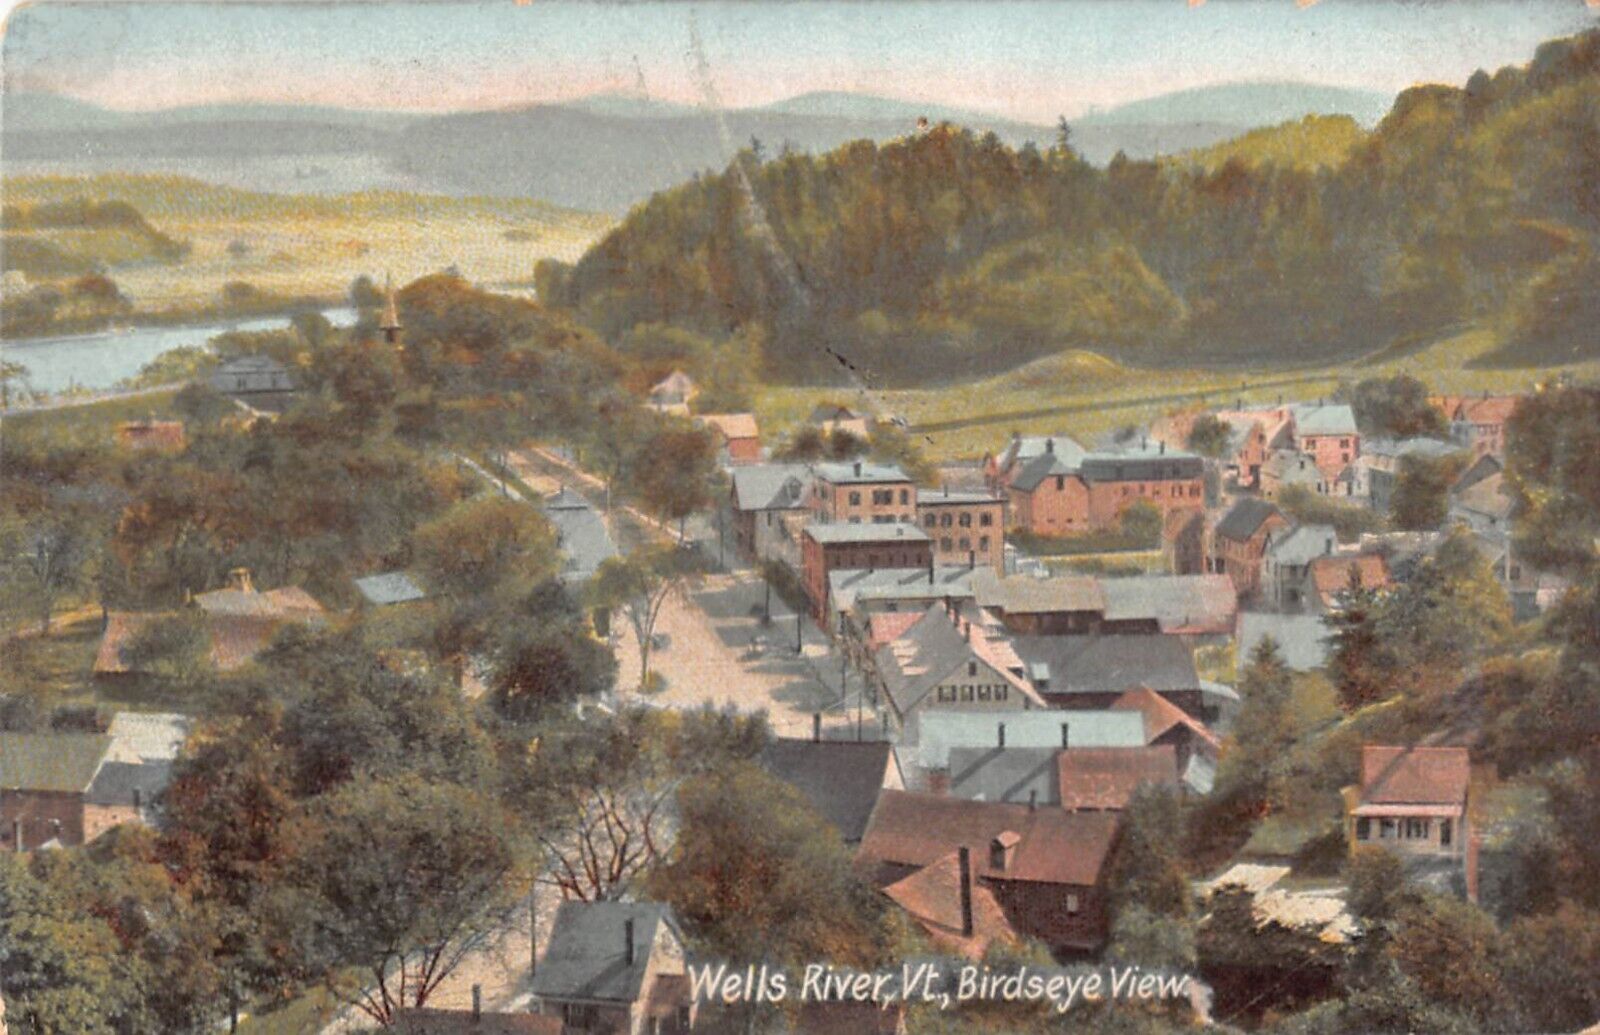 1907 Postcard of Birdseye View of Wells River, Vermont